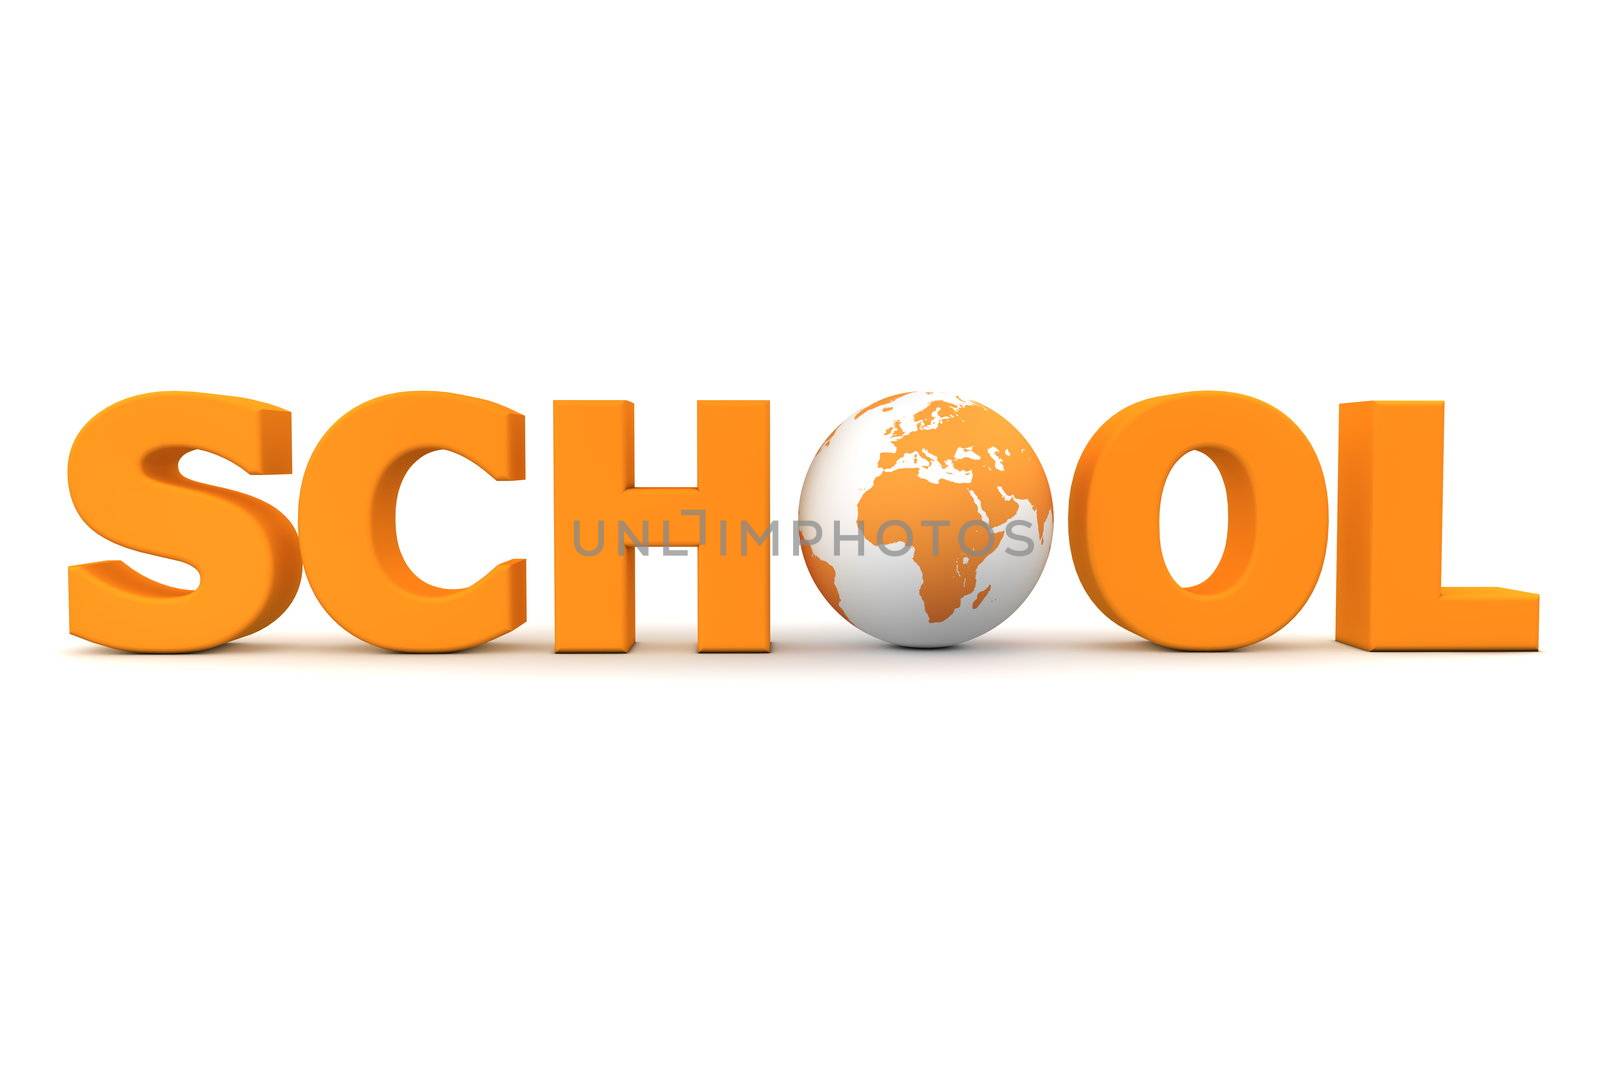 Global School in Orange - One Globe by PixBox